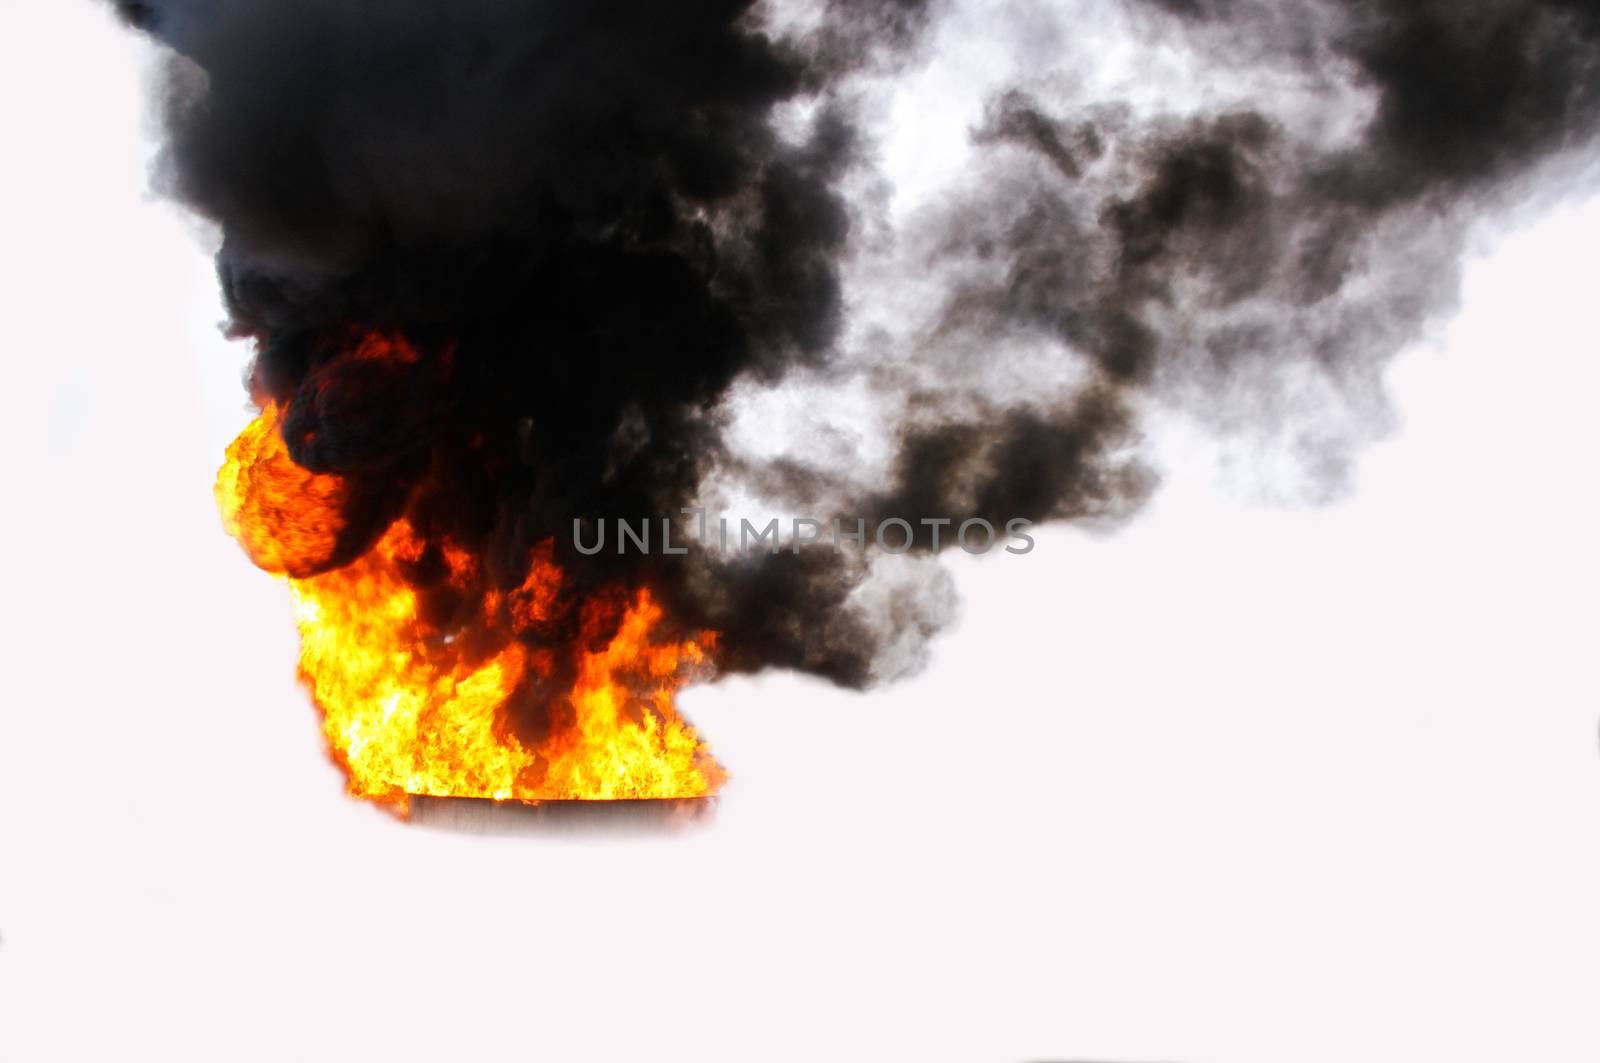 Blazing flames petrol fire by CatherineL-Prod